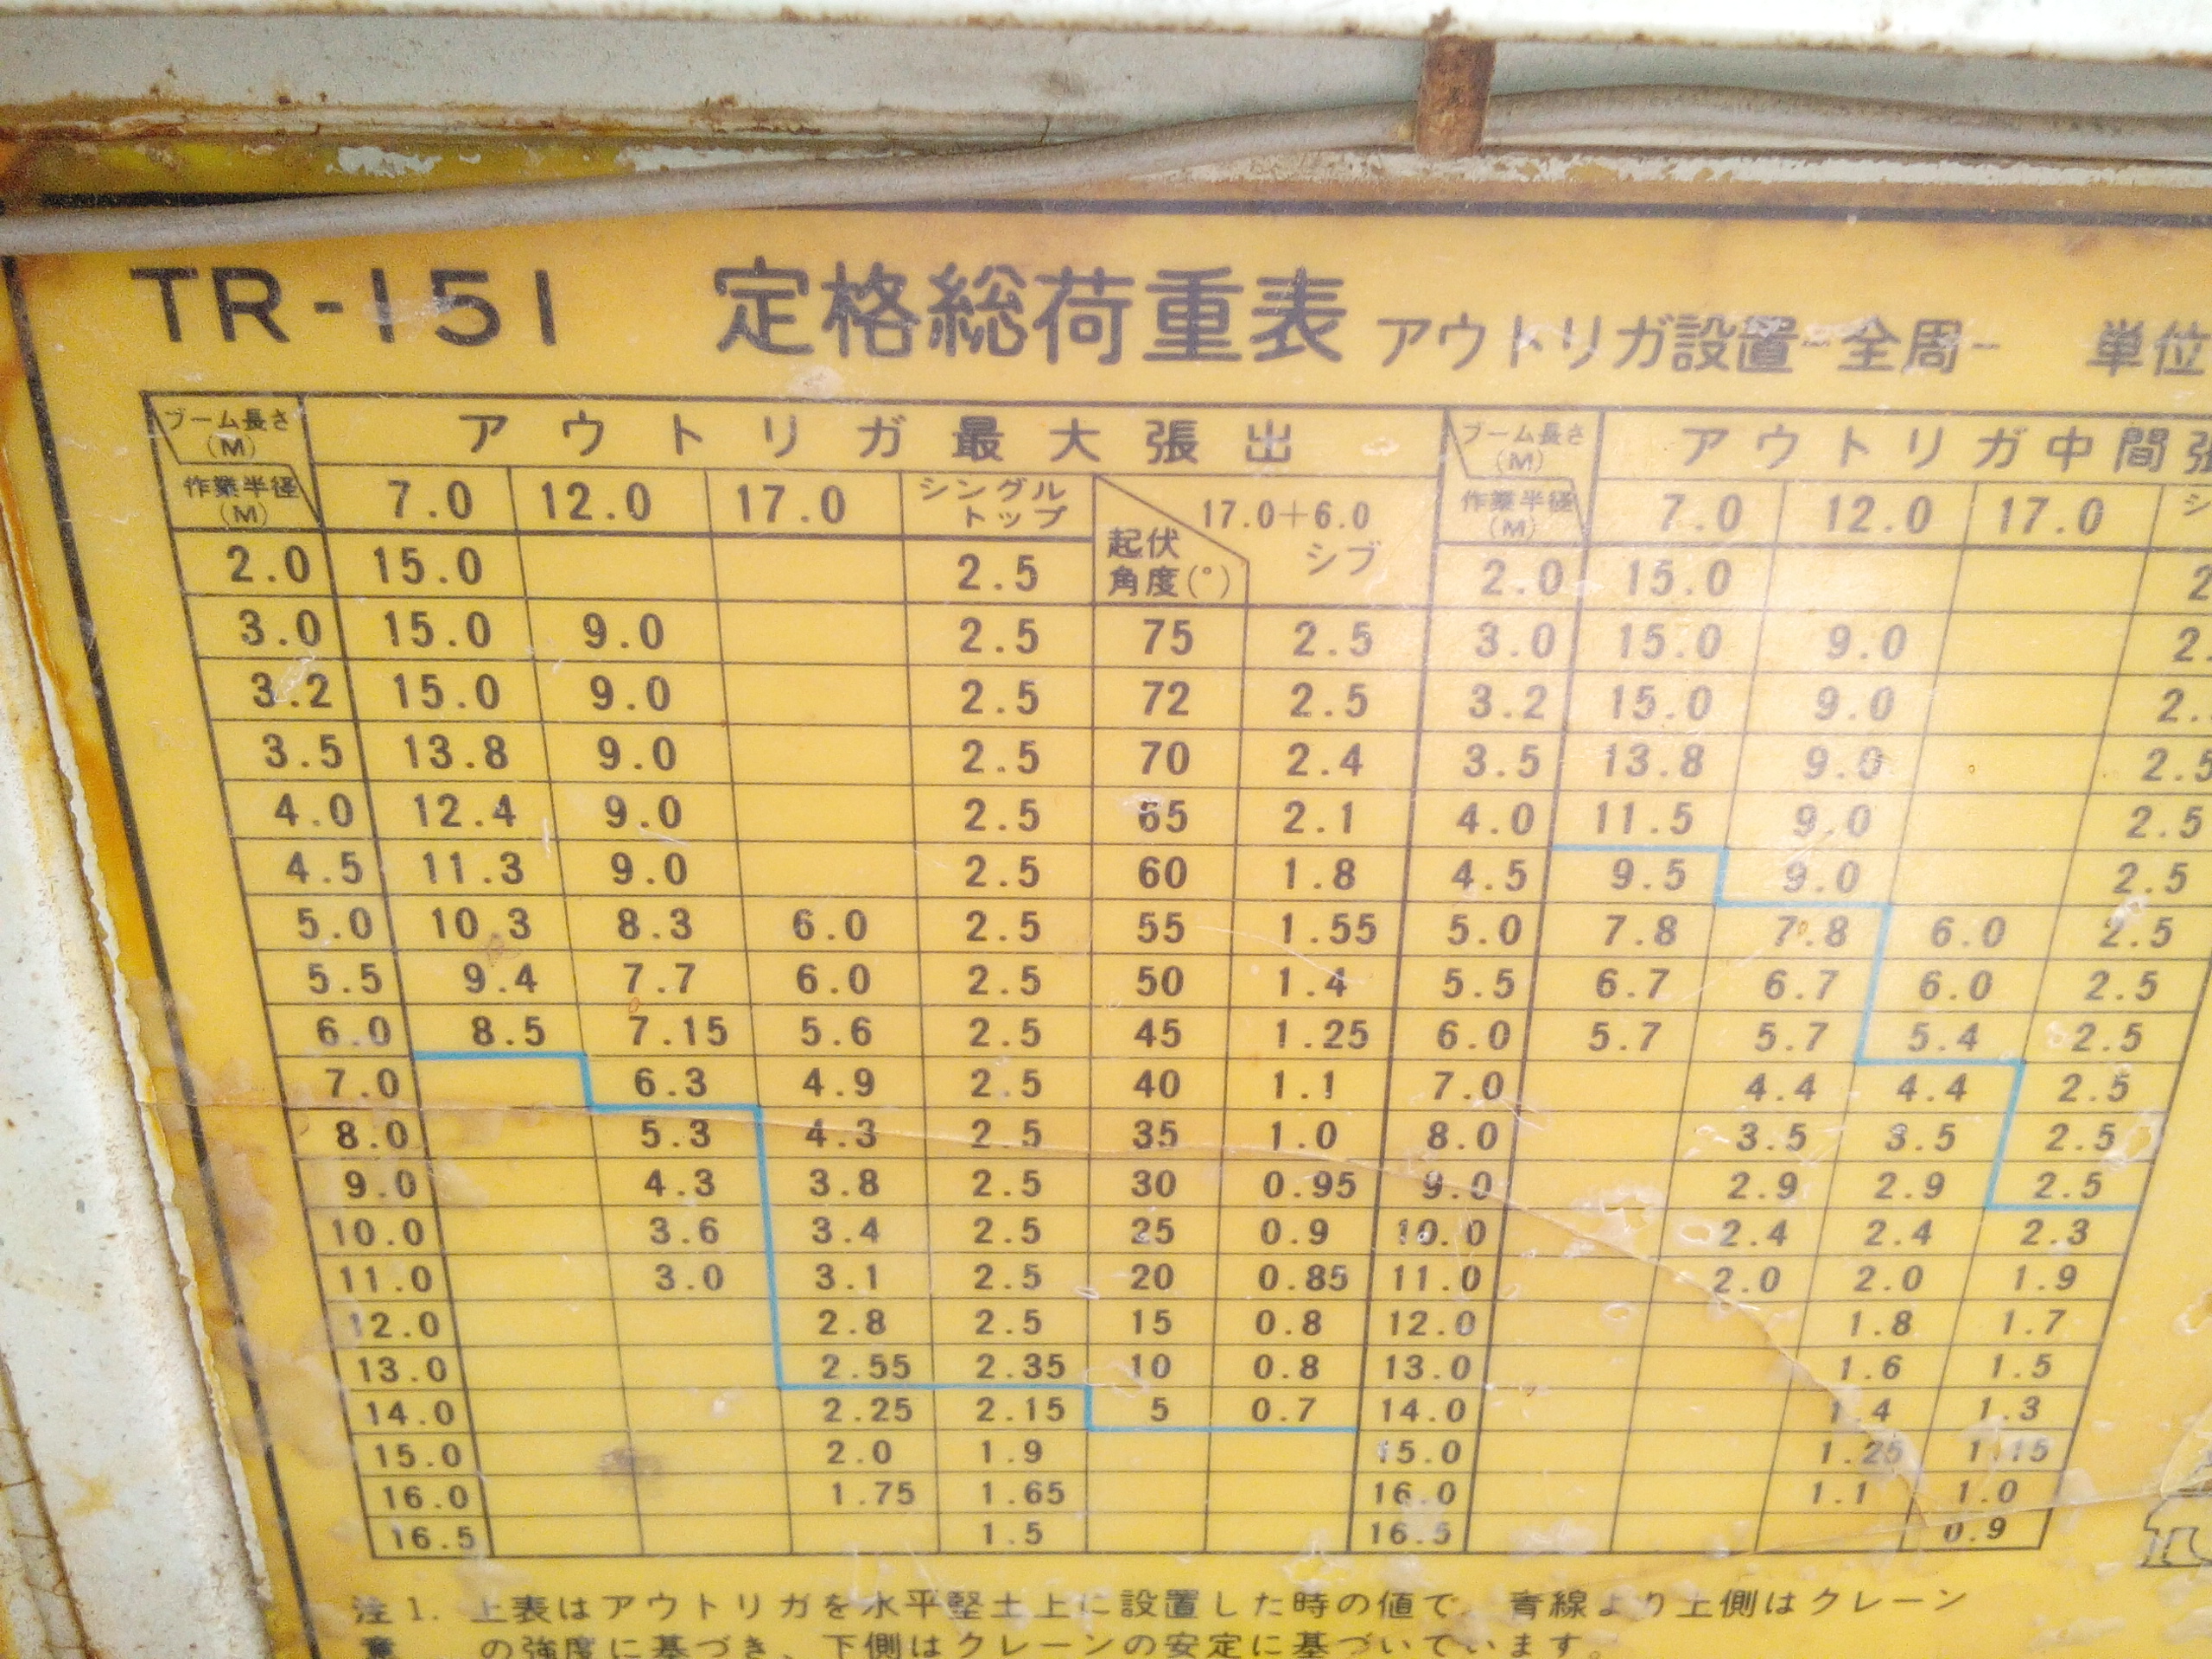 Kato Nk 450 Load Chart